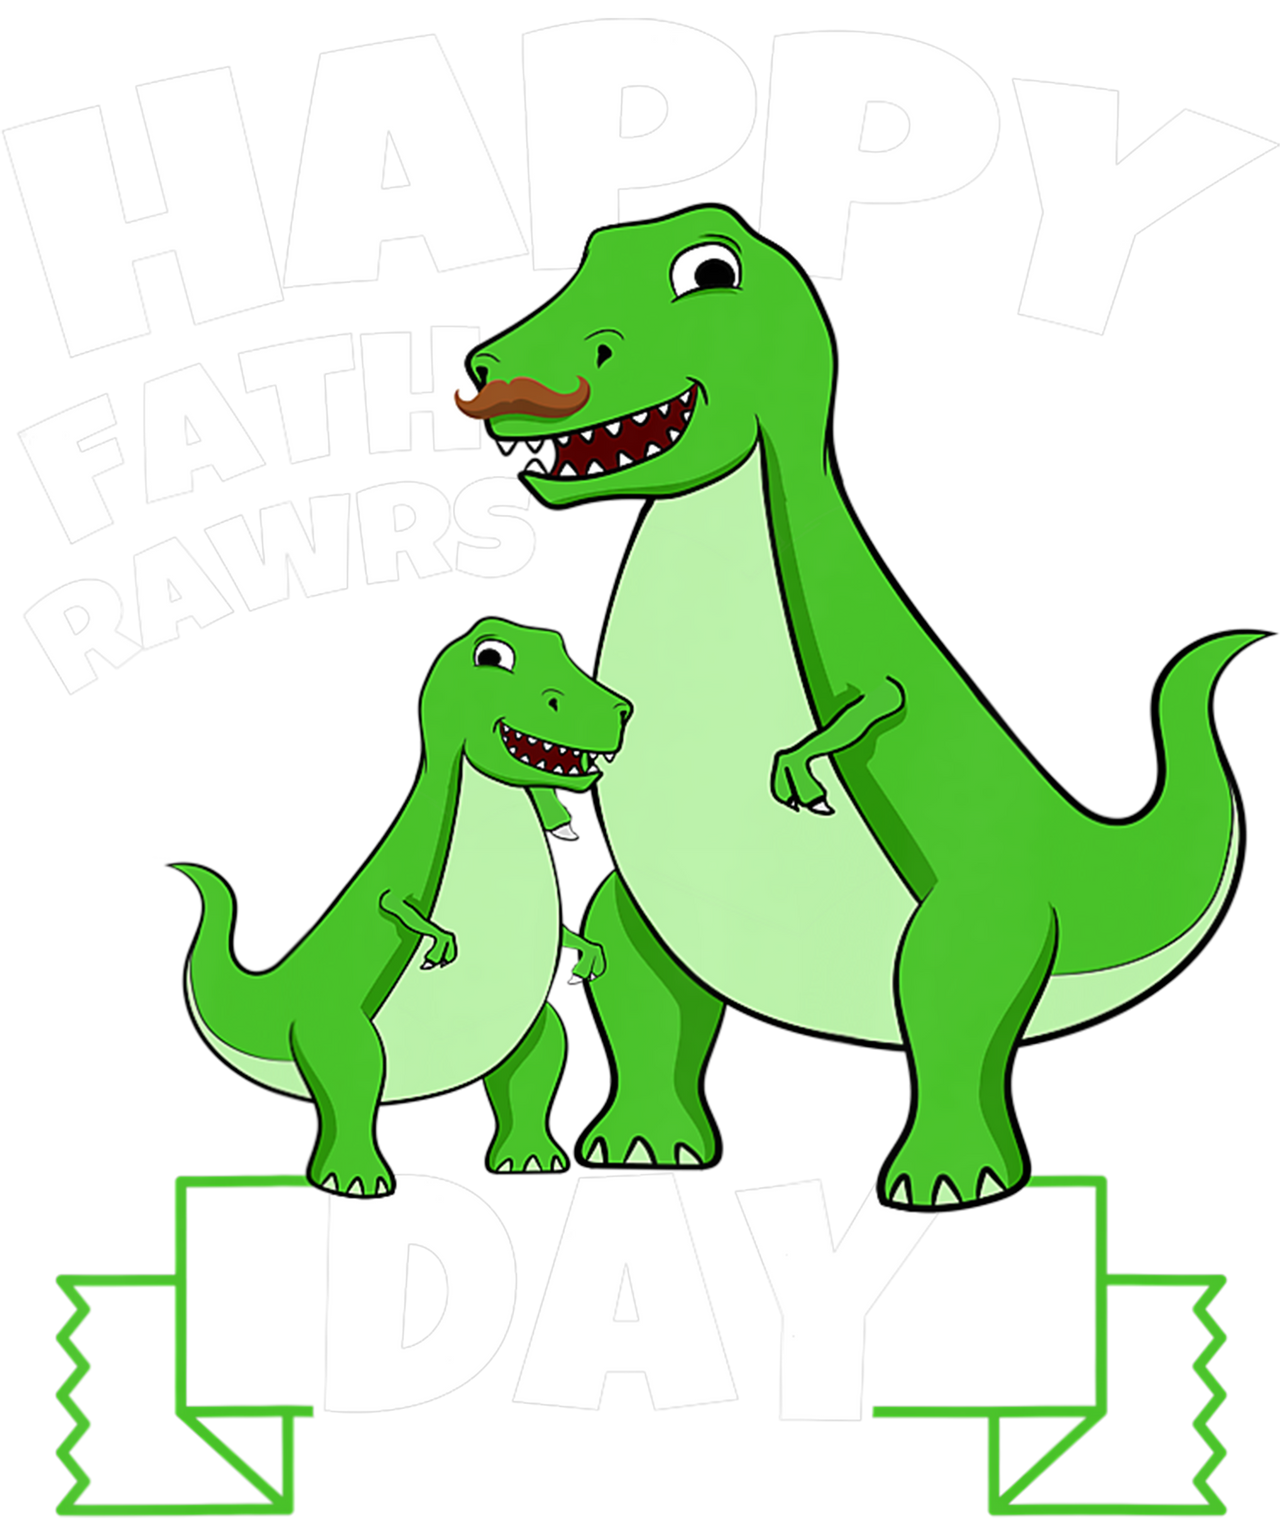 Retro Dadasaurus T Rex Dinosaur Funny Dad Cartoon for Fathers